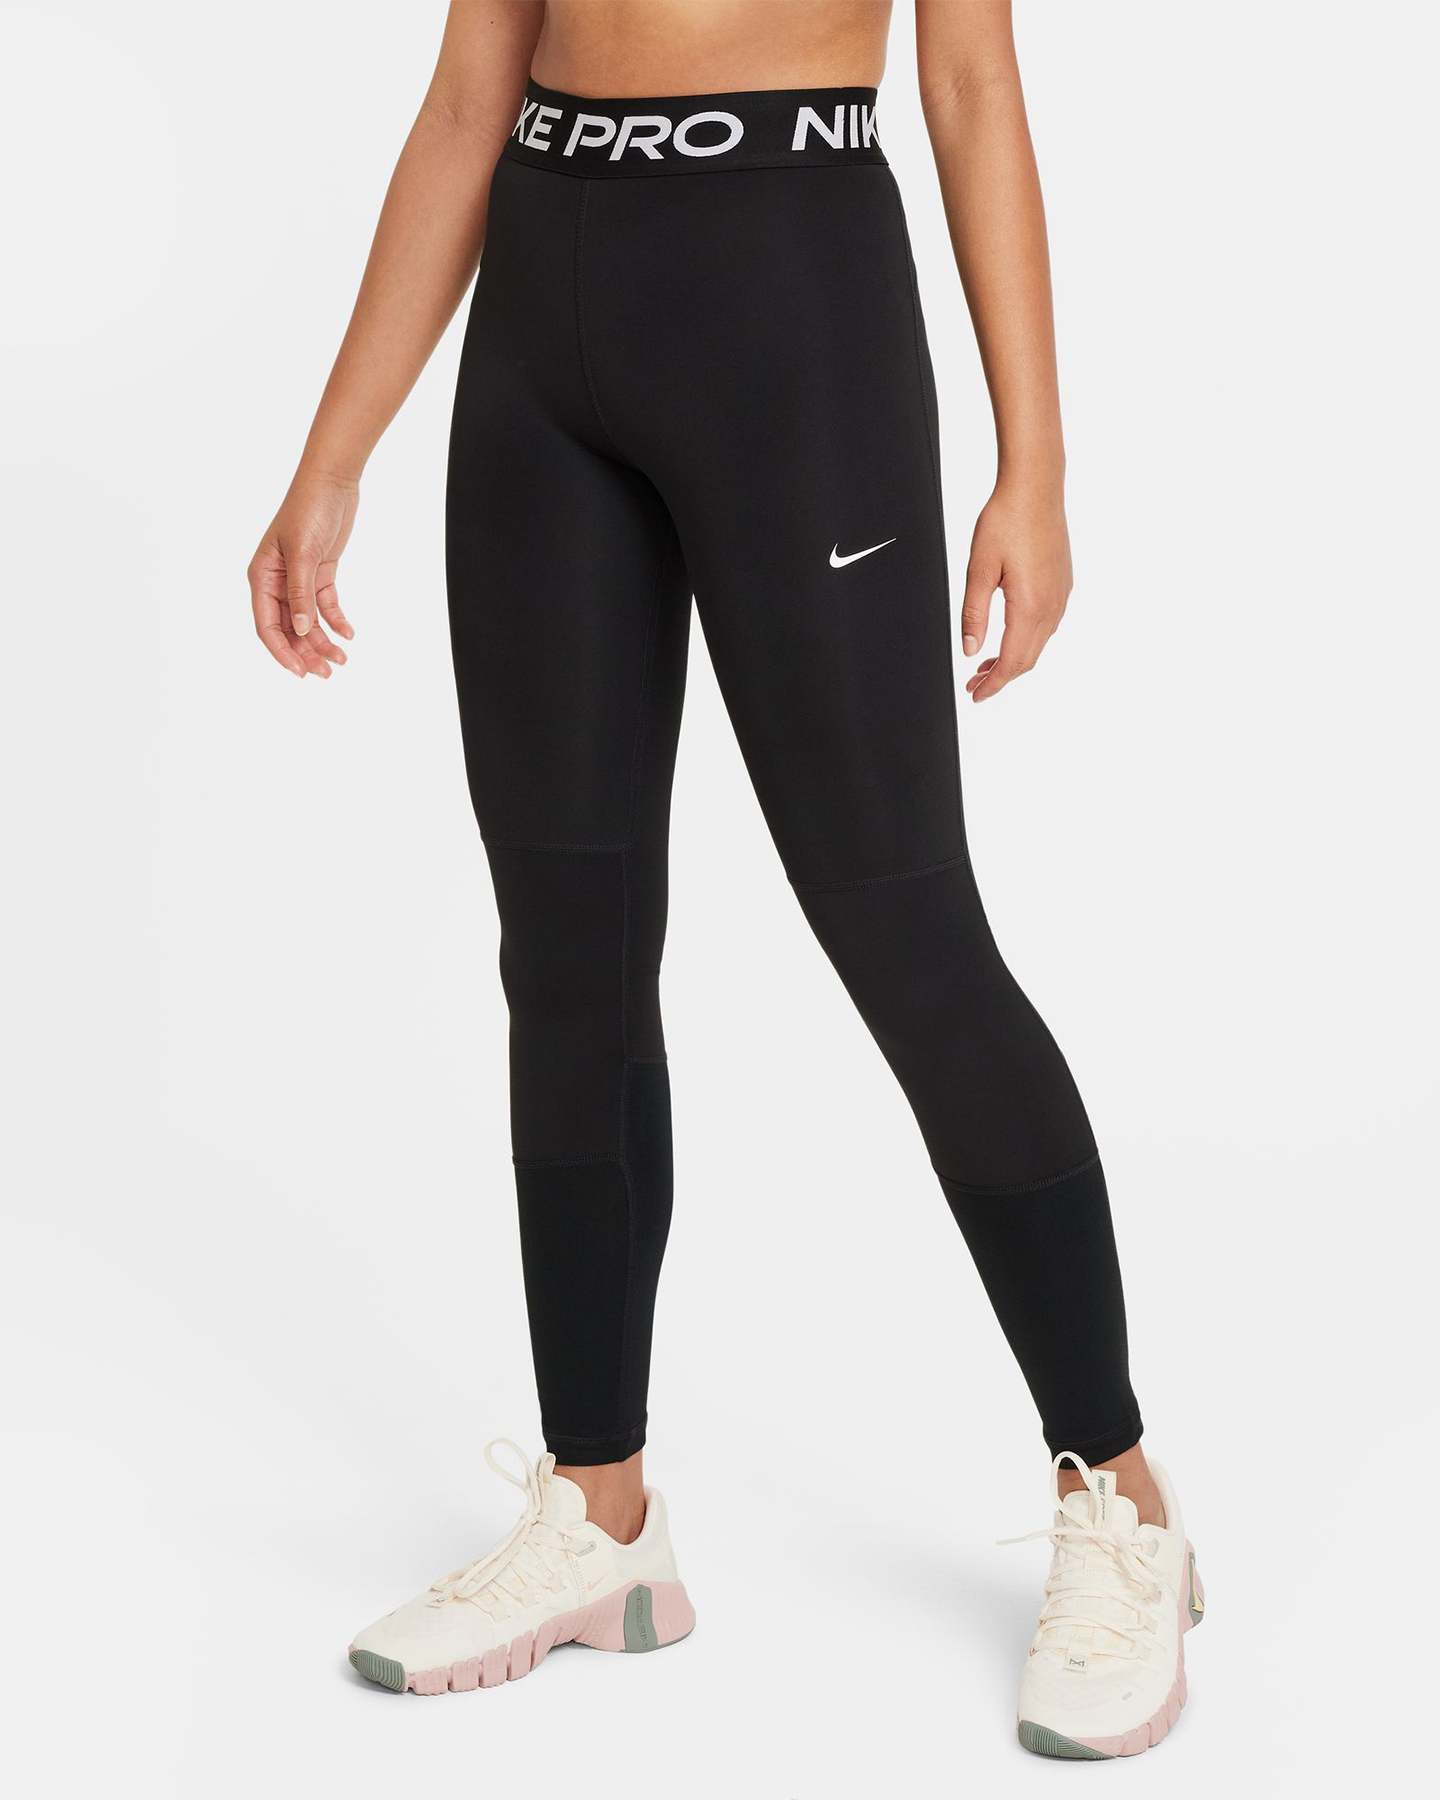 Nike Dri Fit leggings- size small - Regular